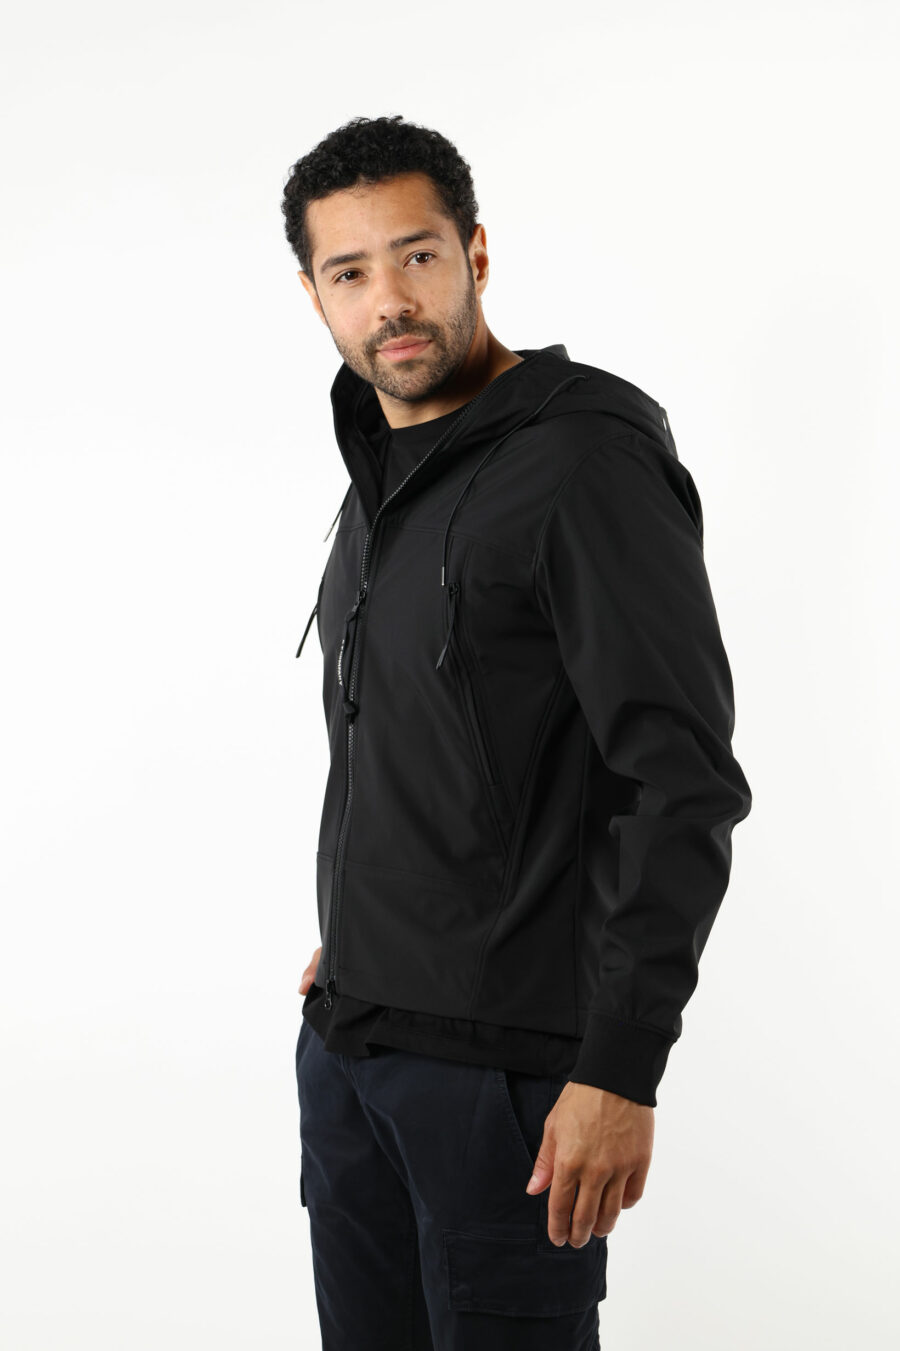 Black jacket with "goggle" logo and hood - 111424